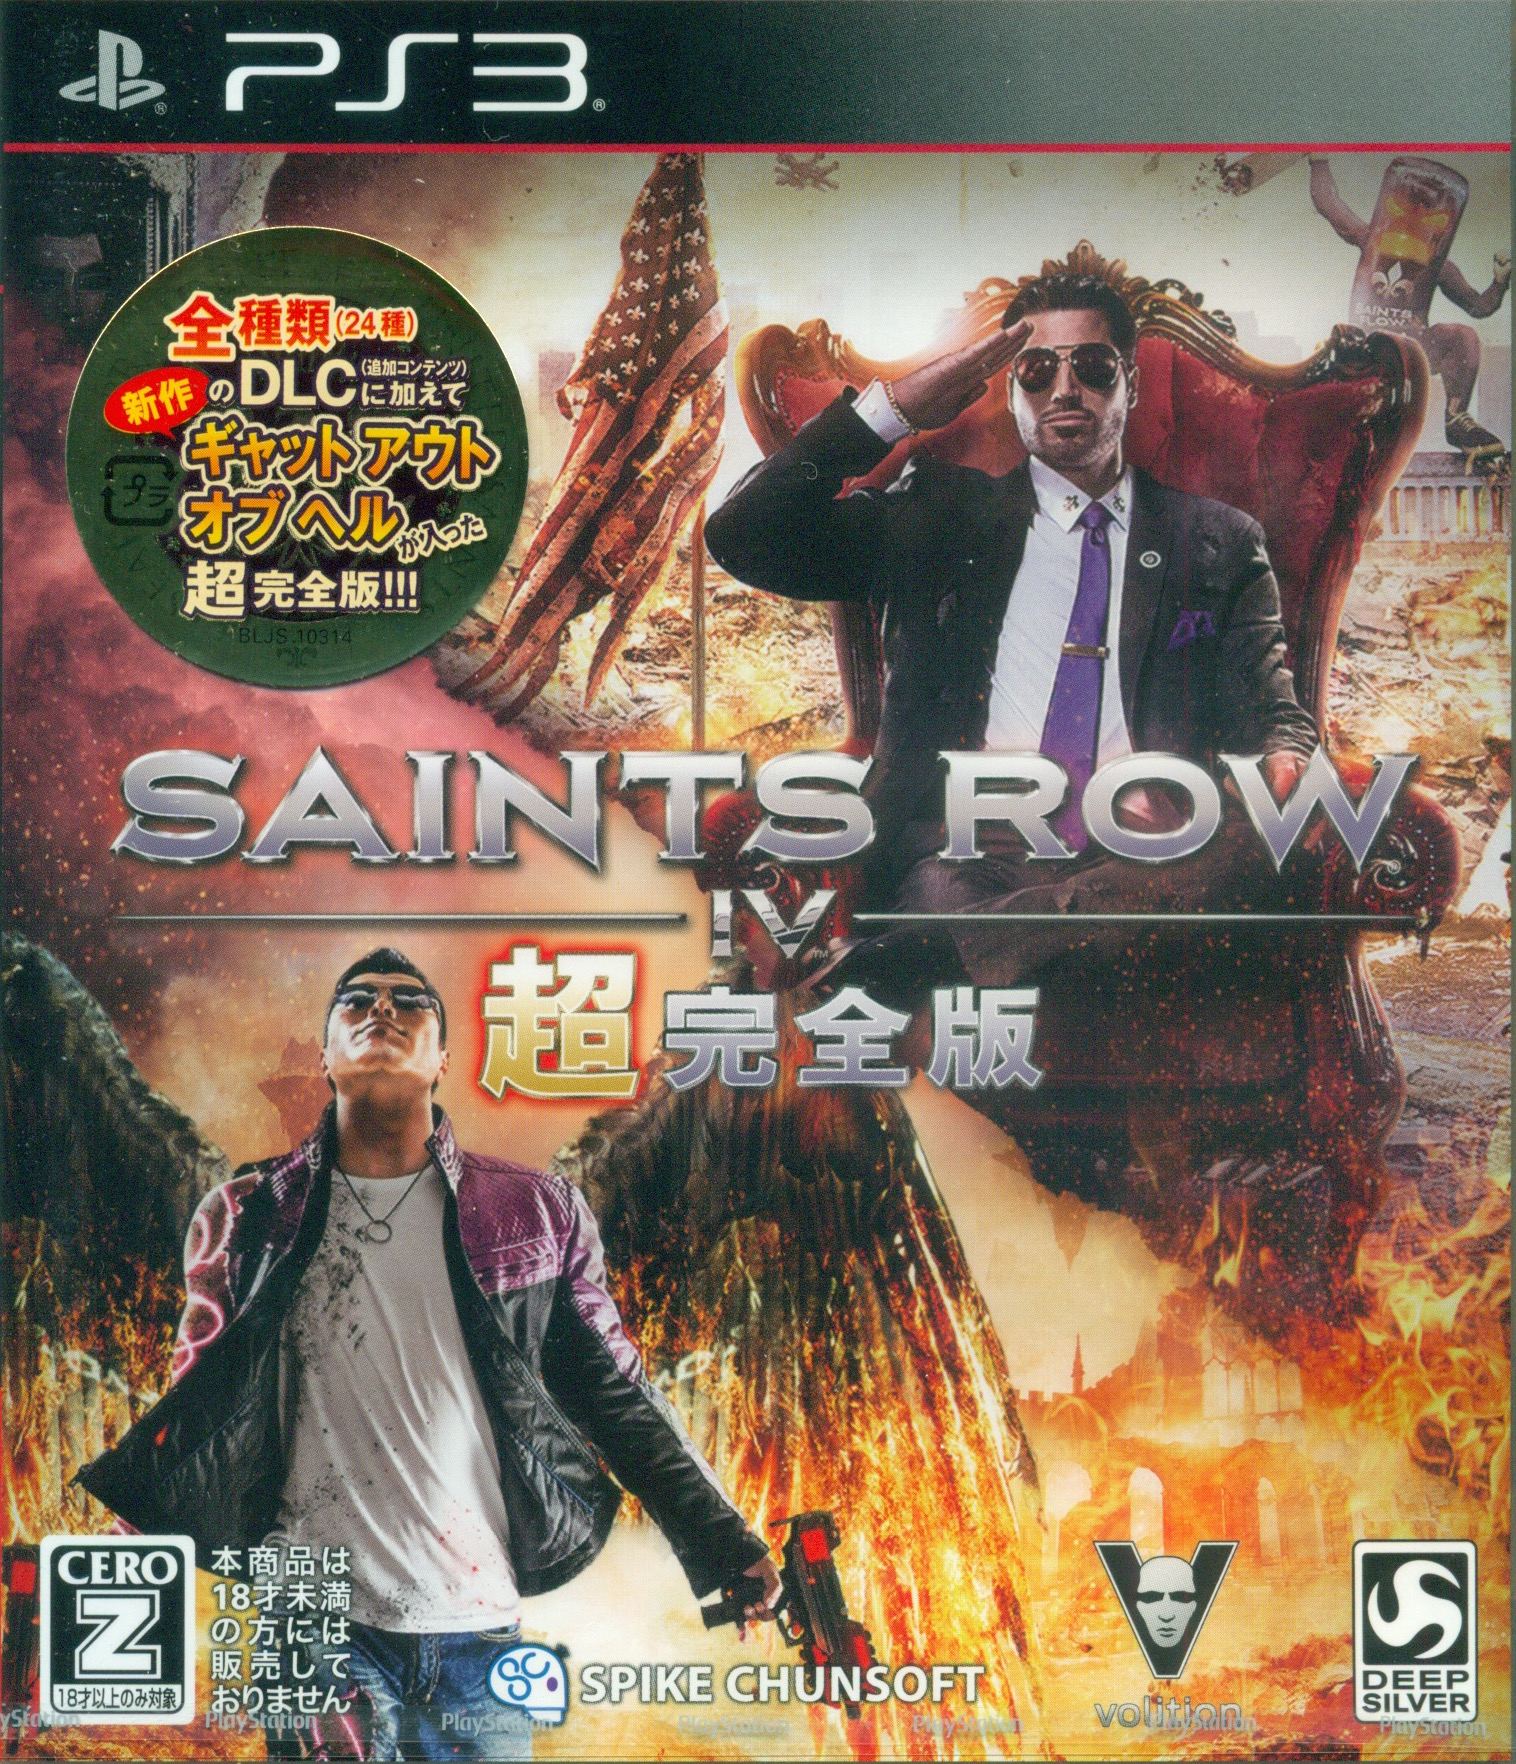 Saints Row IV - PlayStation 3, PlayStation 3